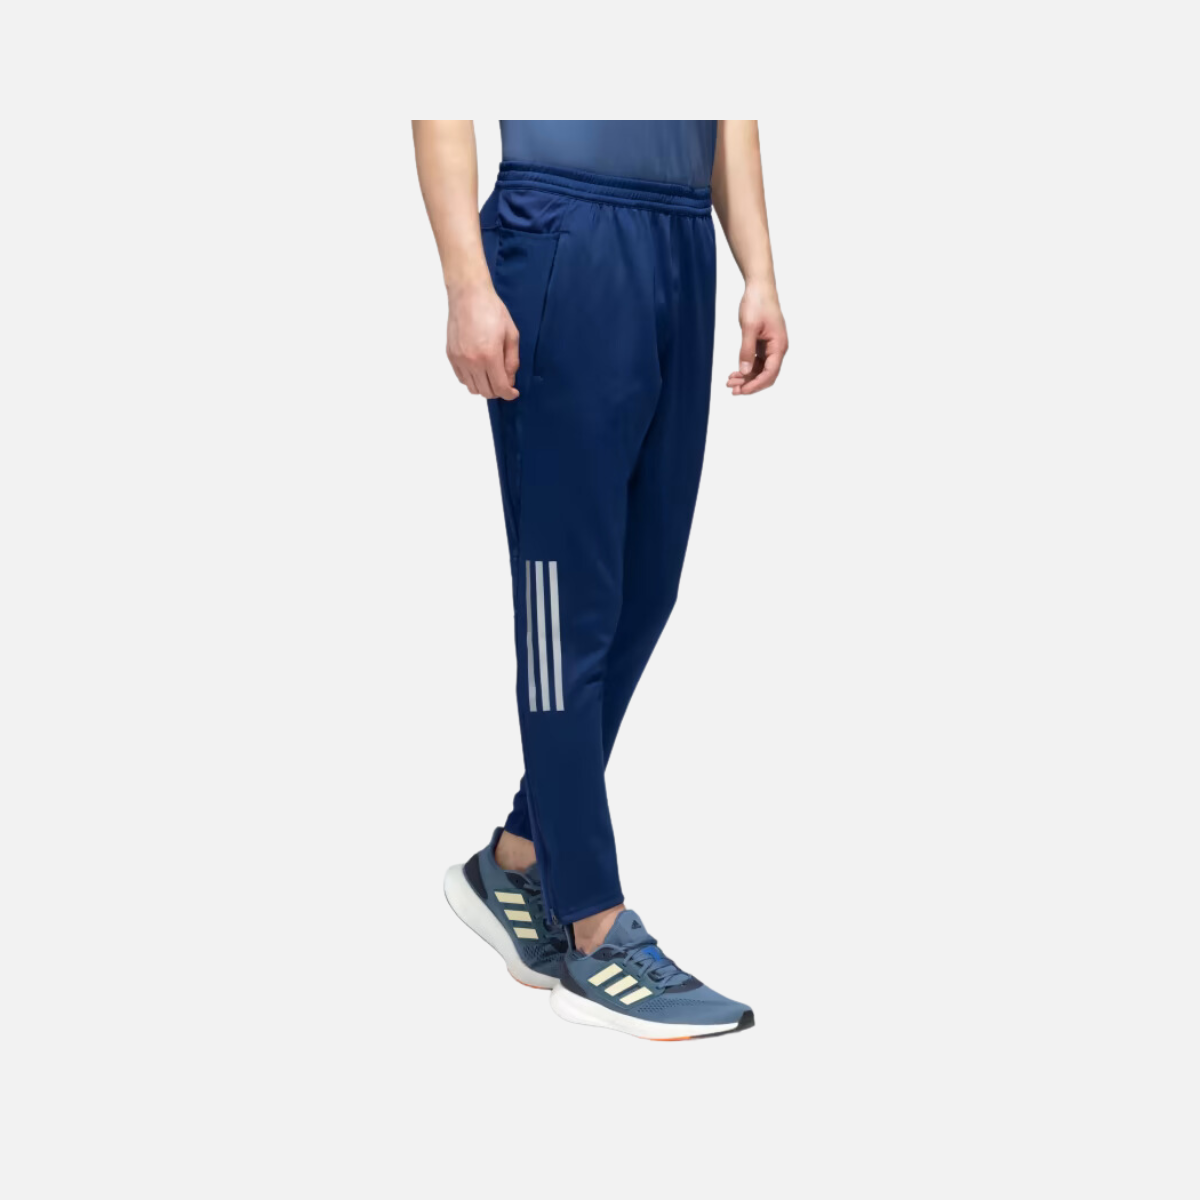 Adidas OTR Astro Men's Training Pant -Dark Blue